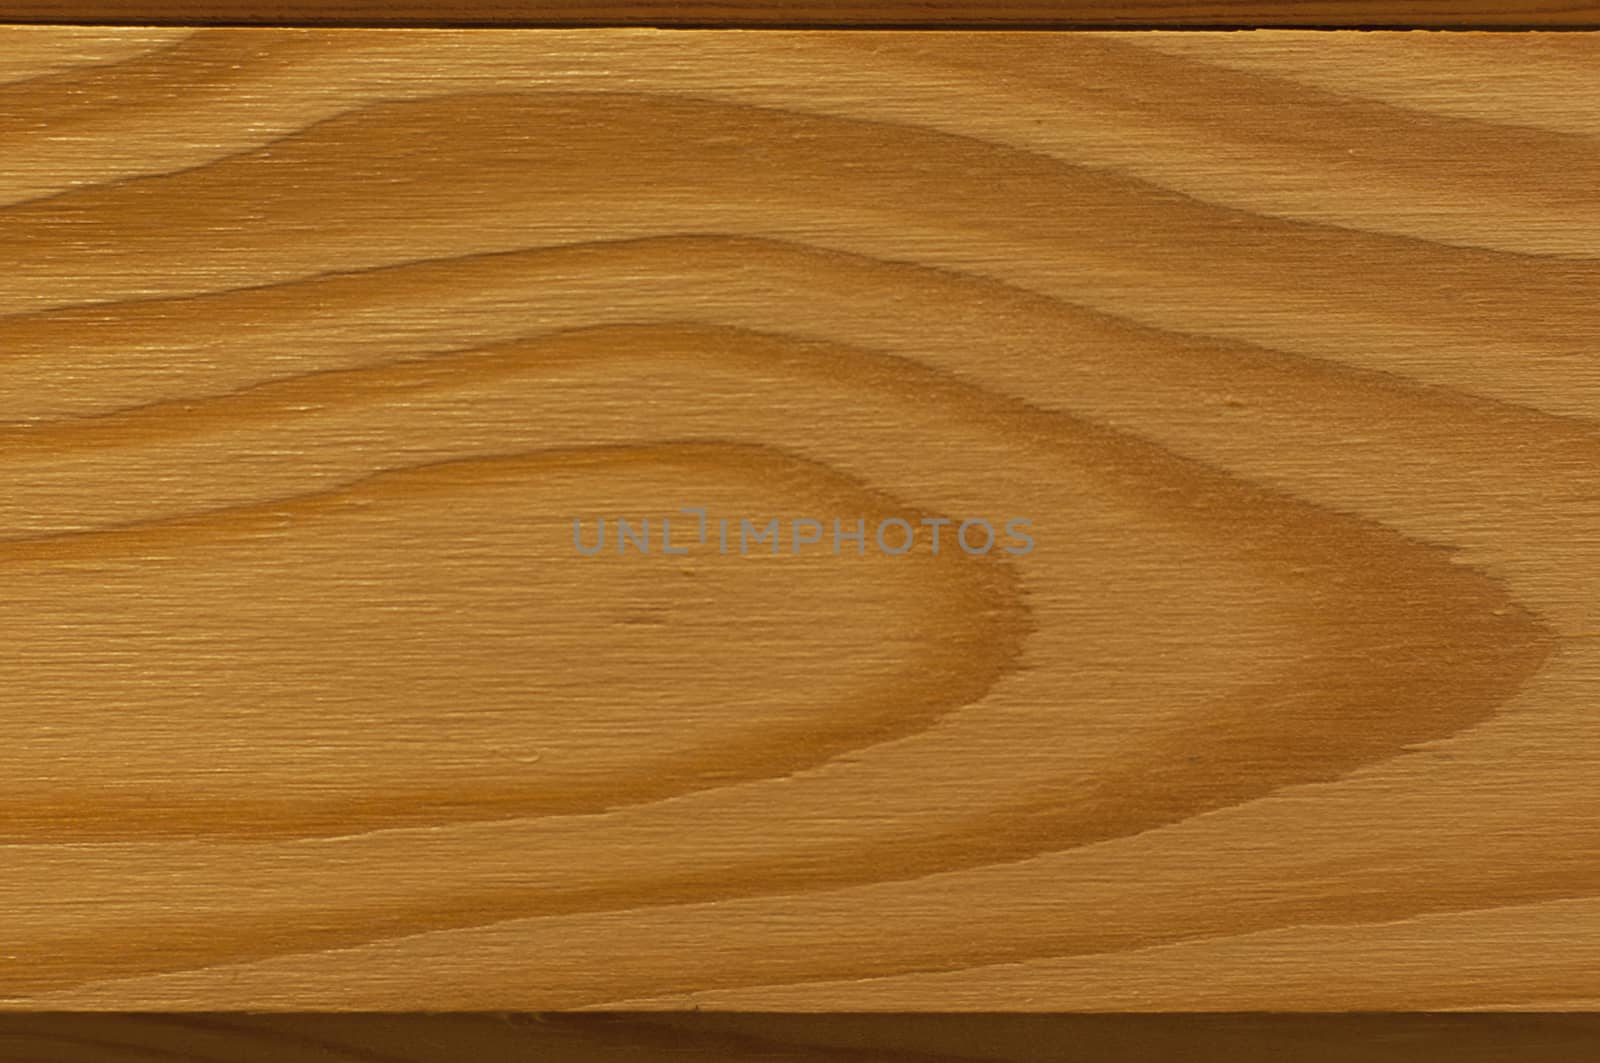 Wood texture by remusrigo